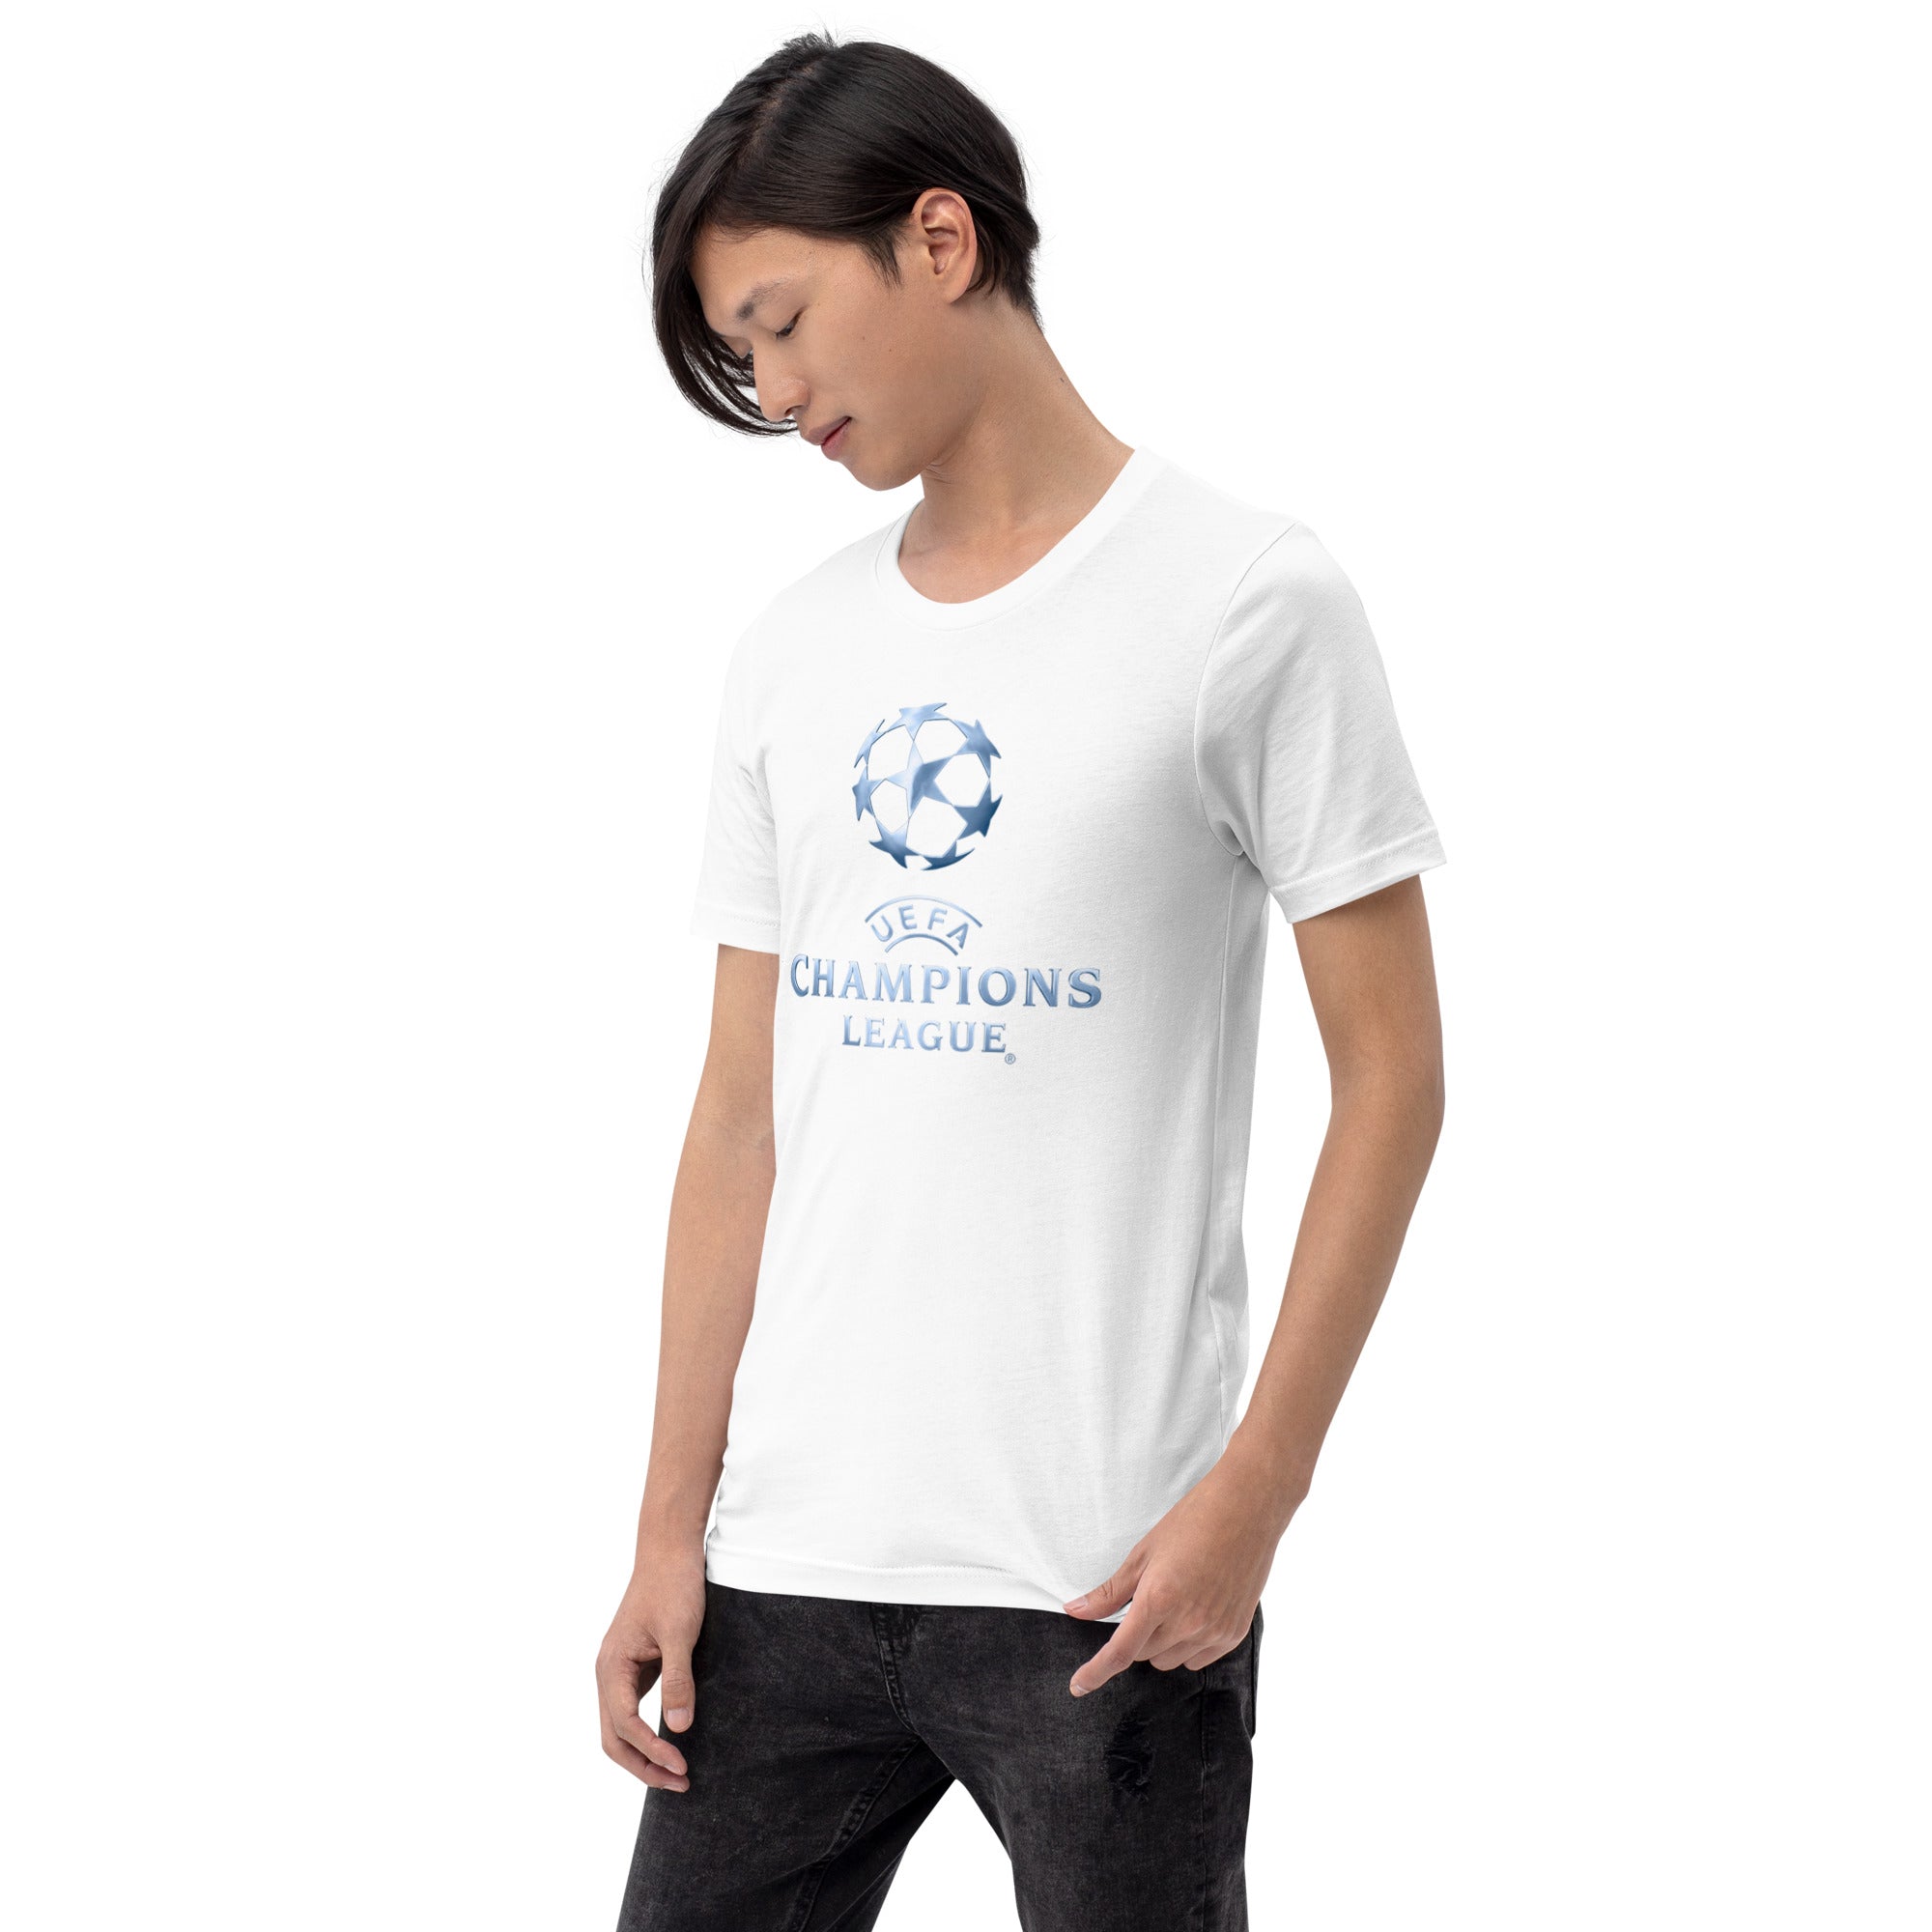 Football Champions League t shirt for men